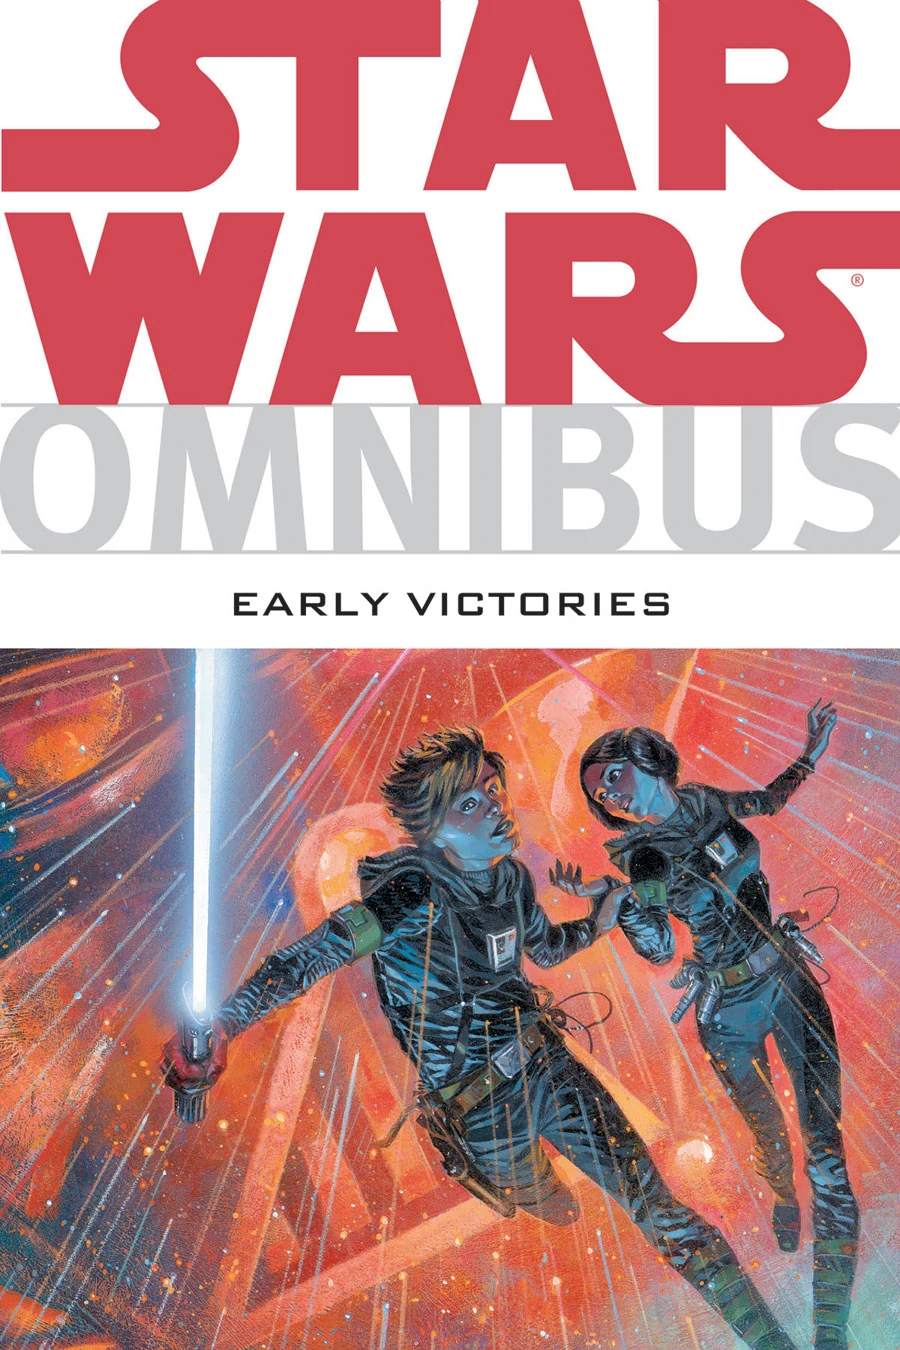 Star Wars Omnibus Early Victories